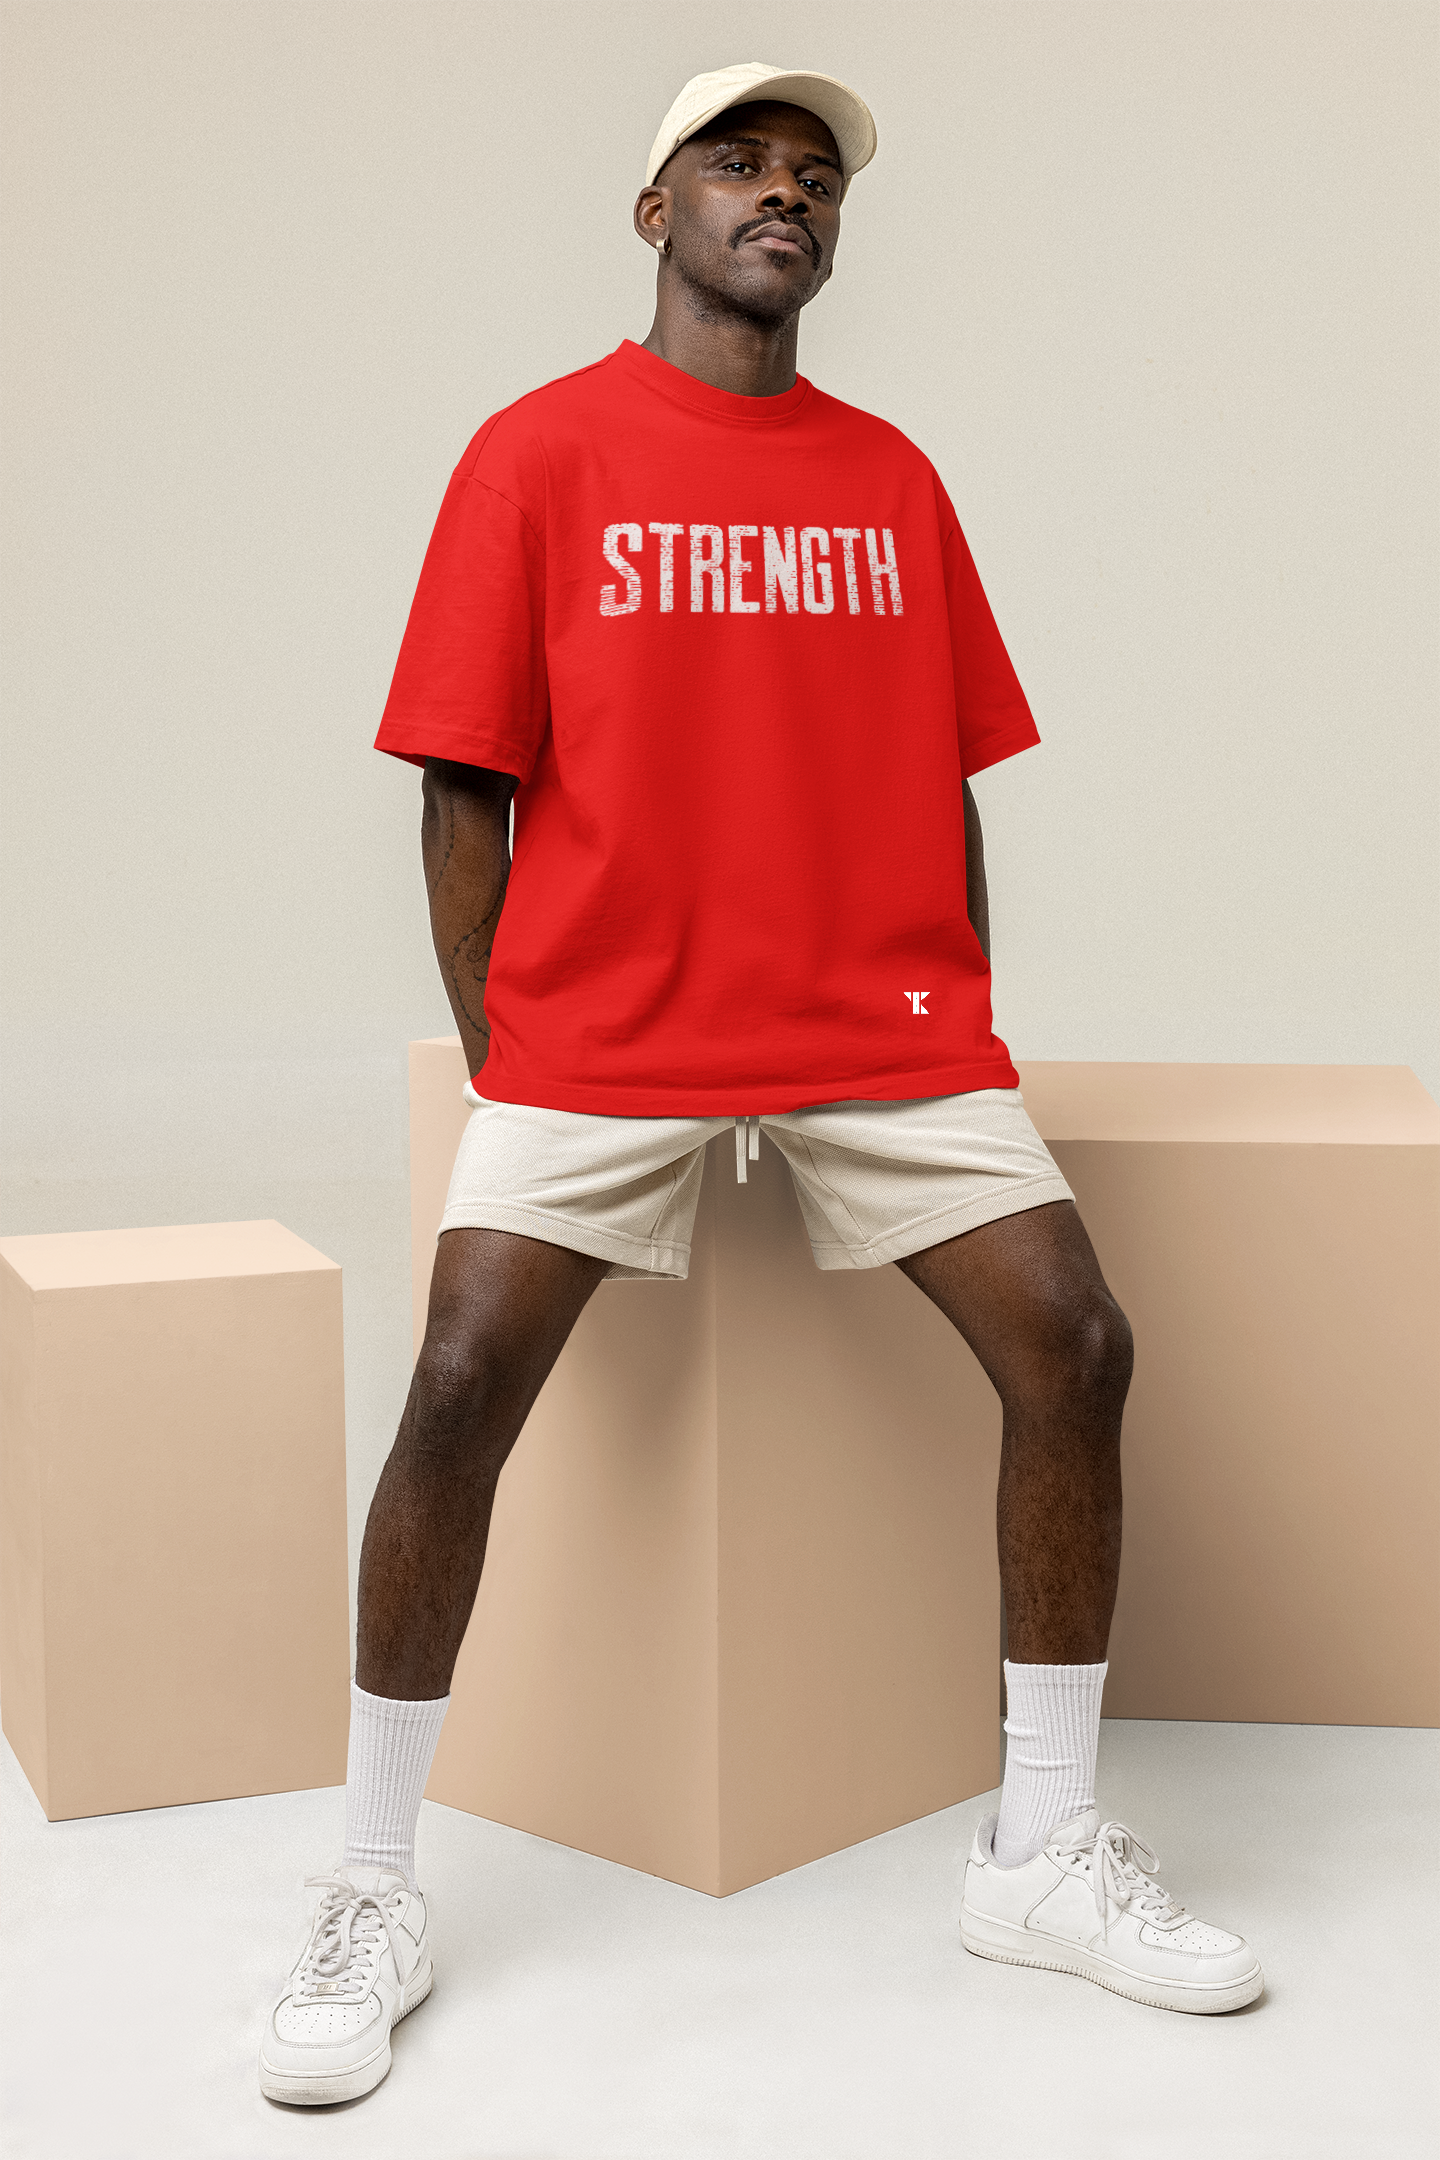 Strength Dense Oversized Red Unisex T-Shirt | Tarun Kapoor Collection